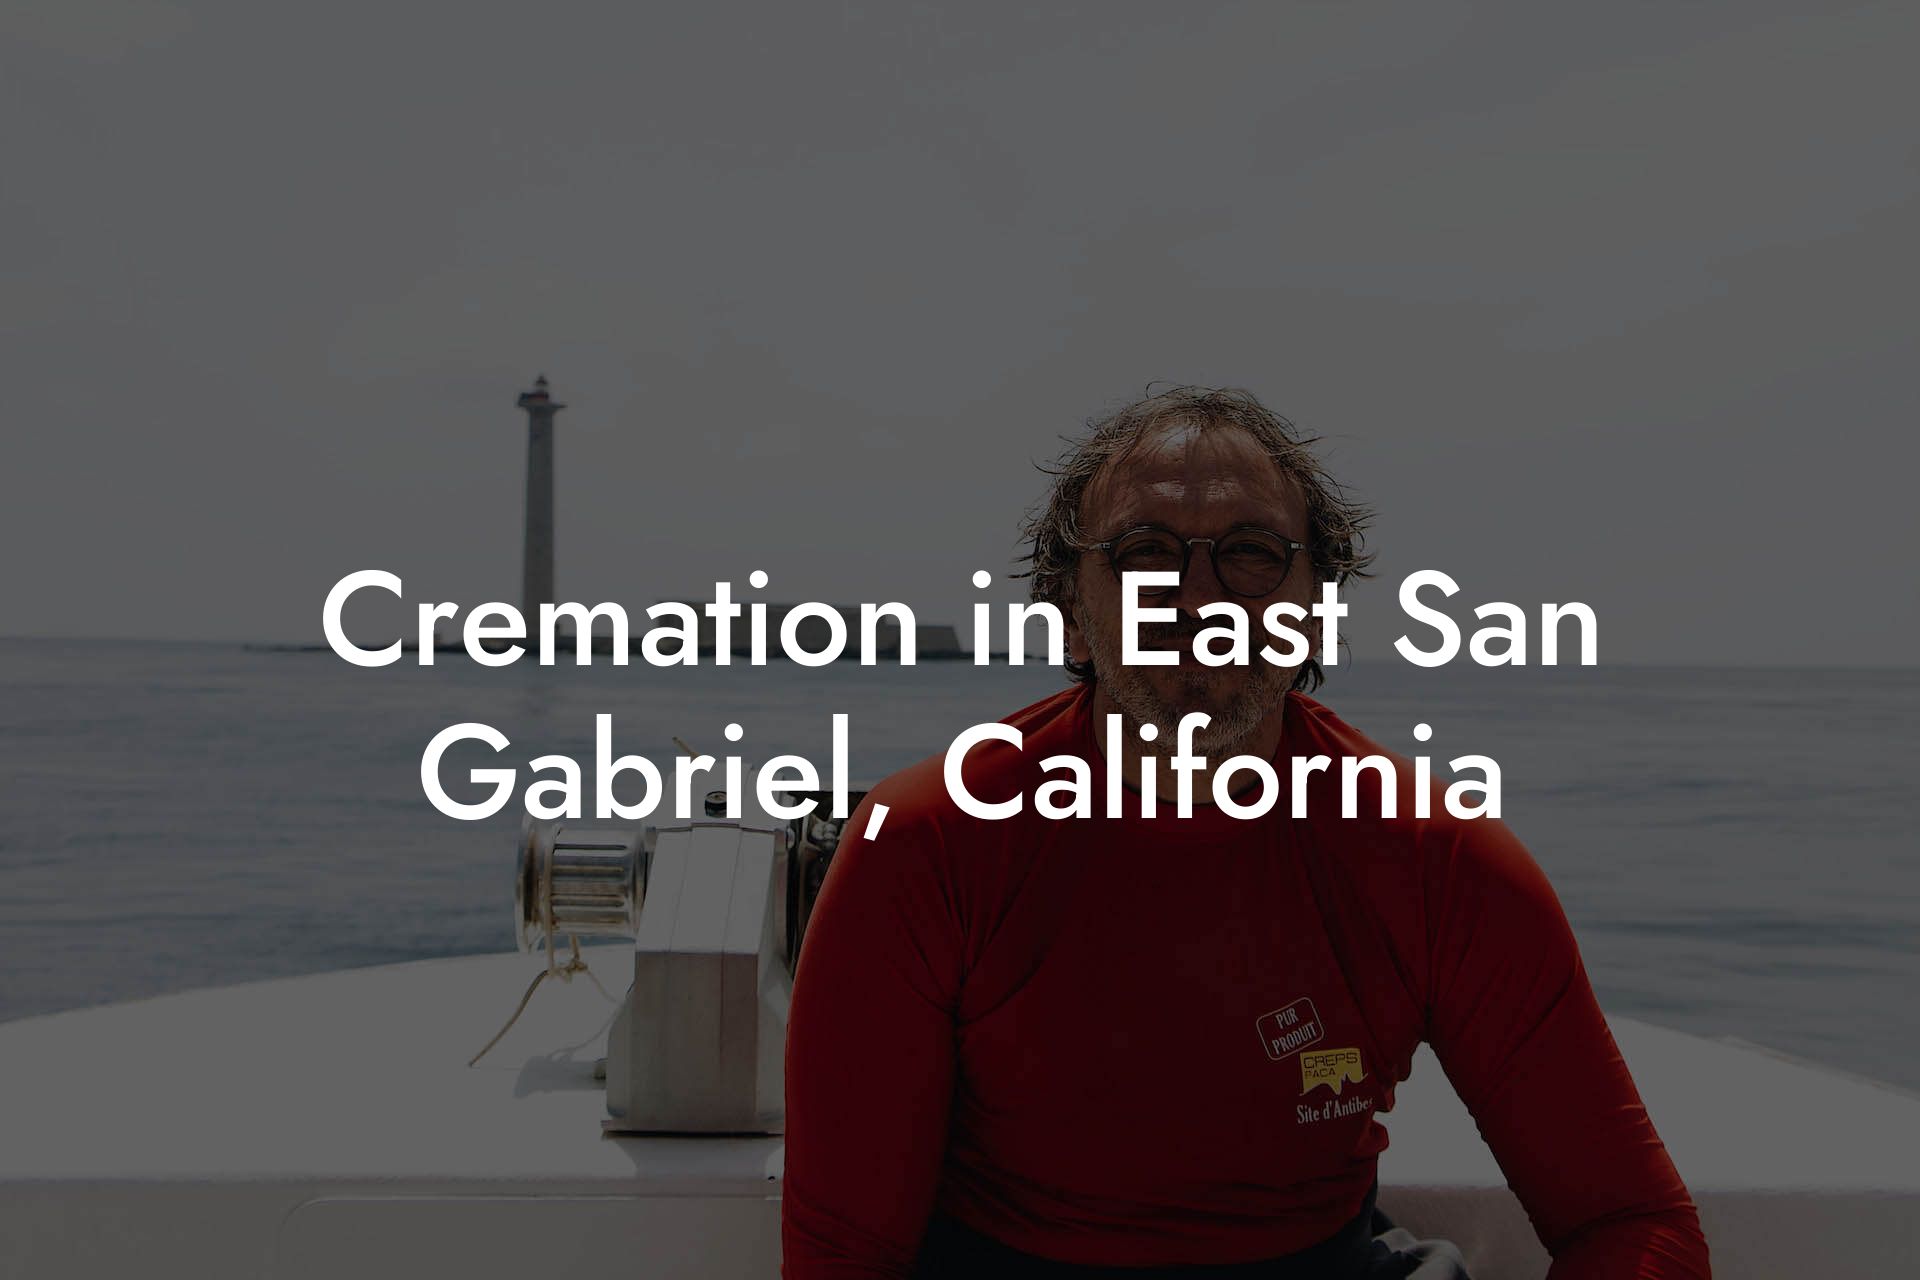 Cremation in East San Gabriel, California